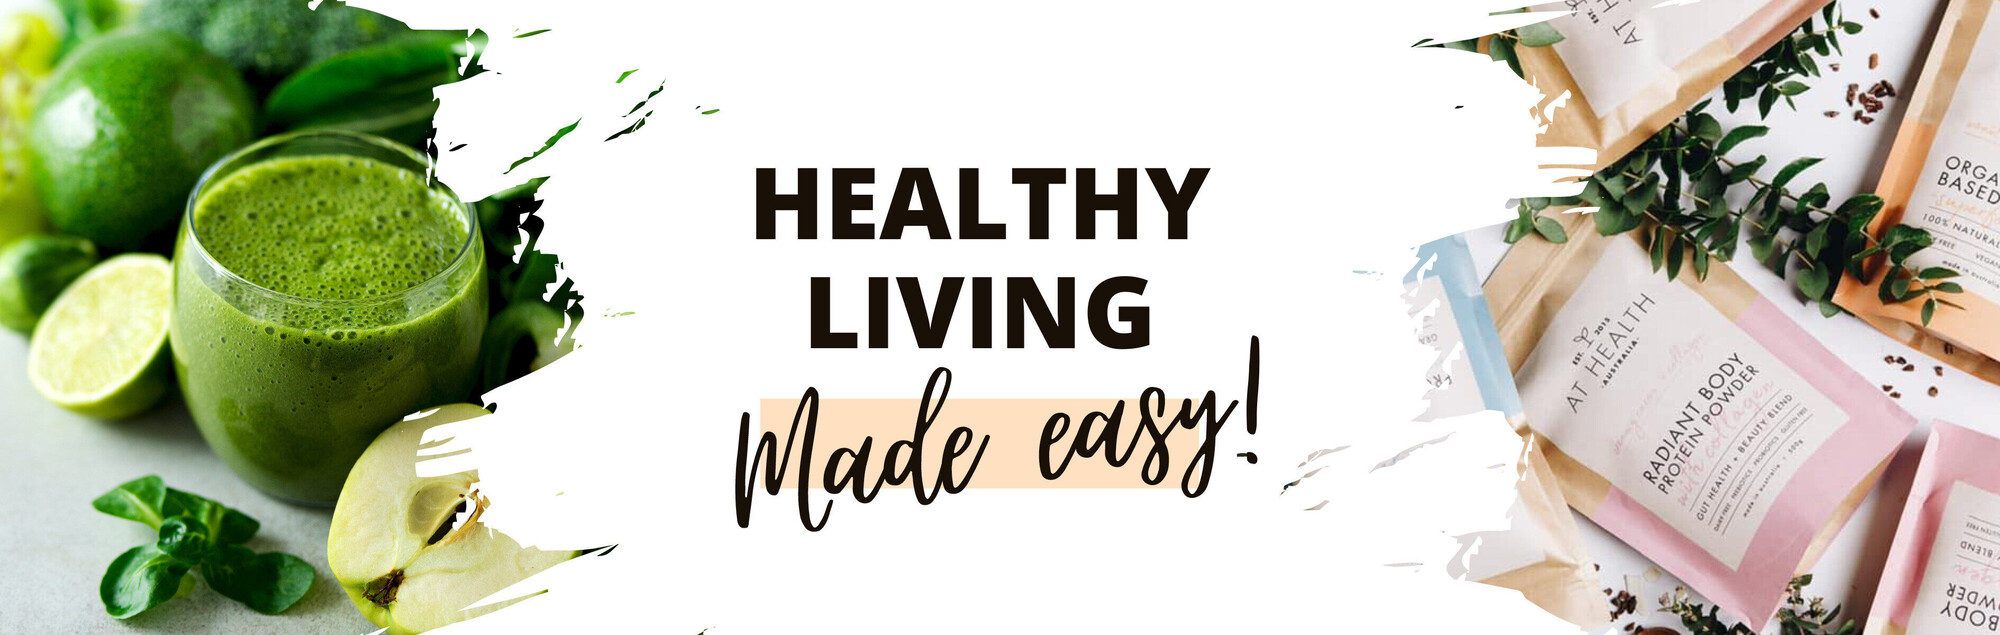 Health Food Online Banner